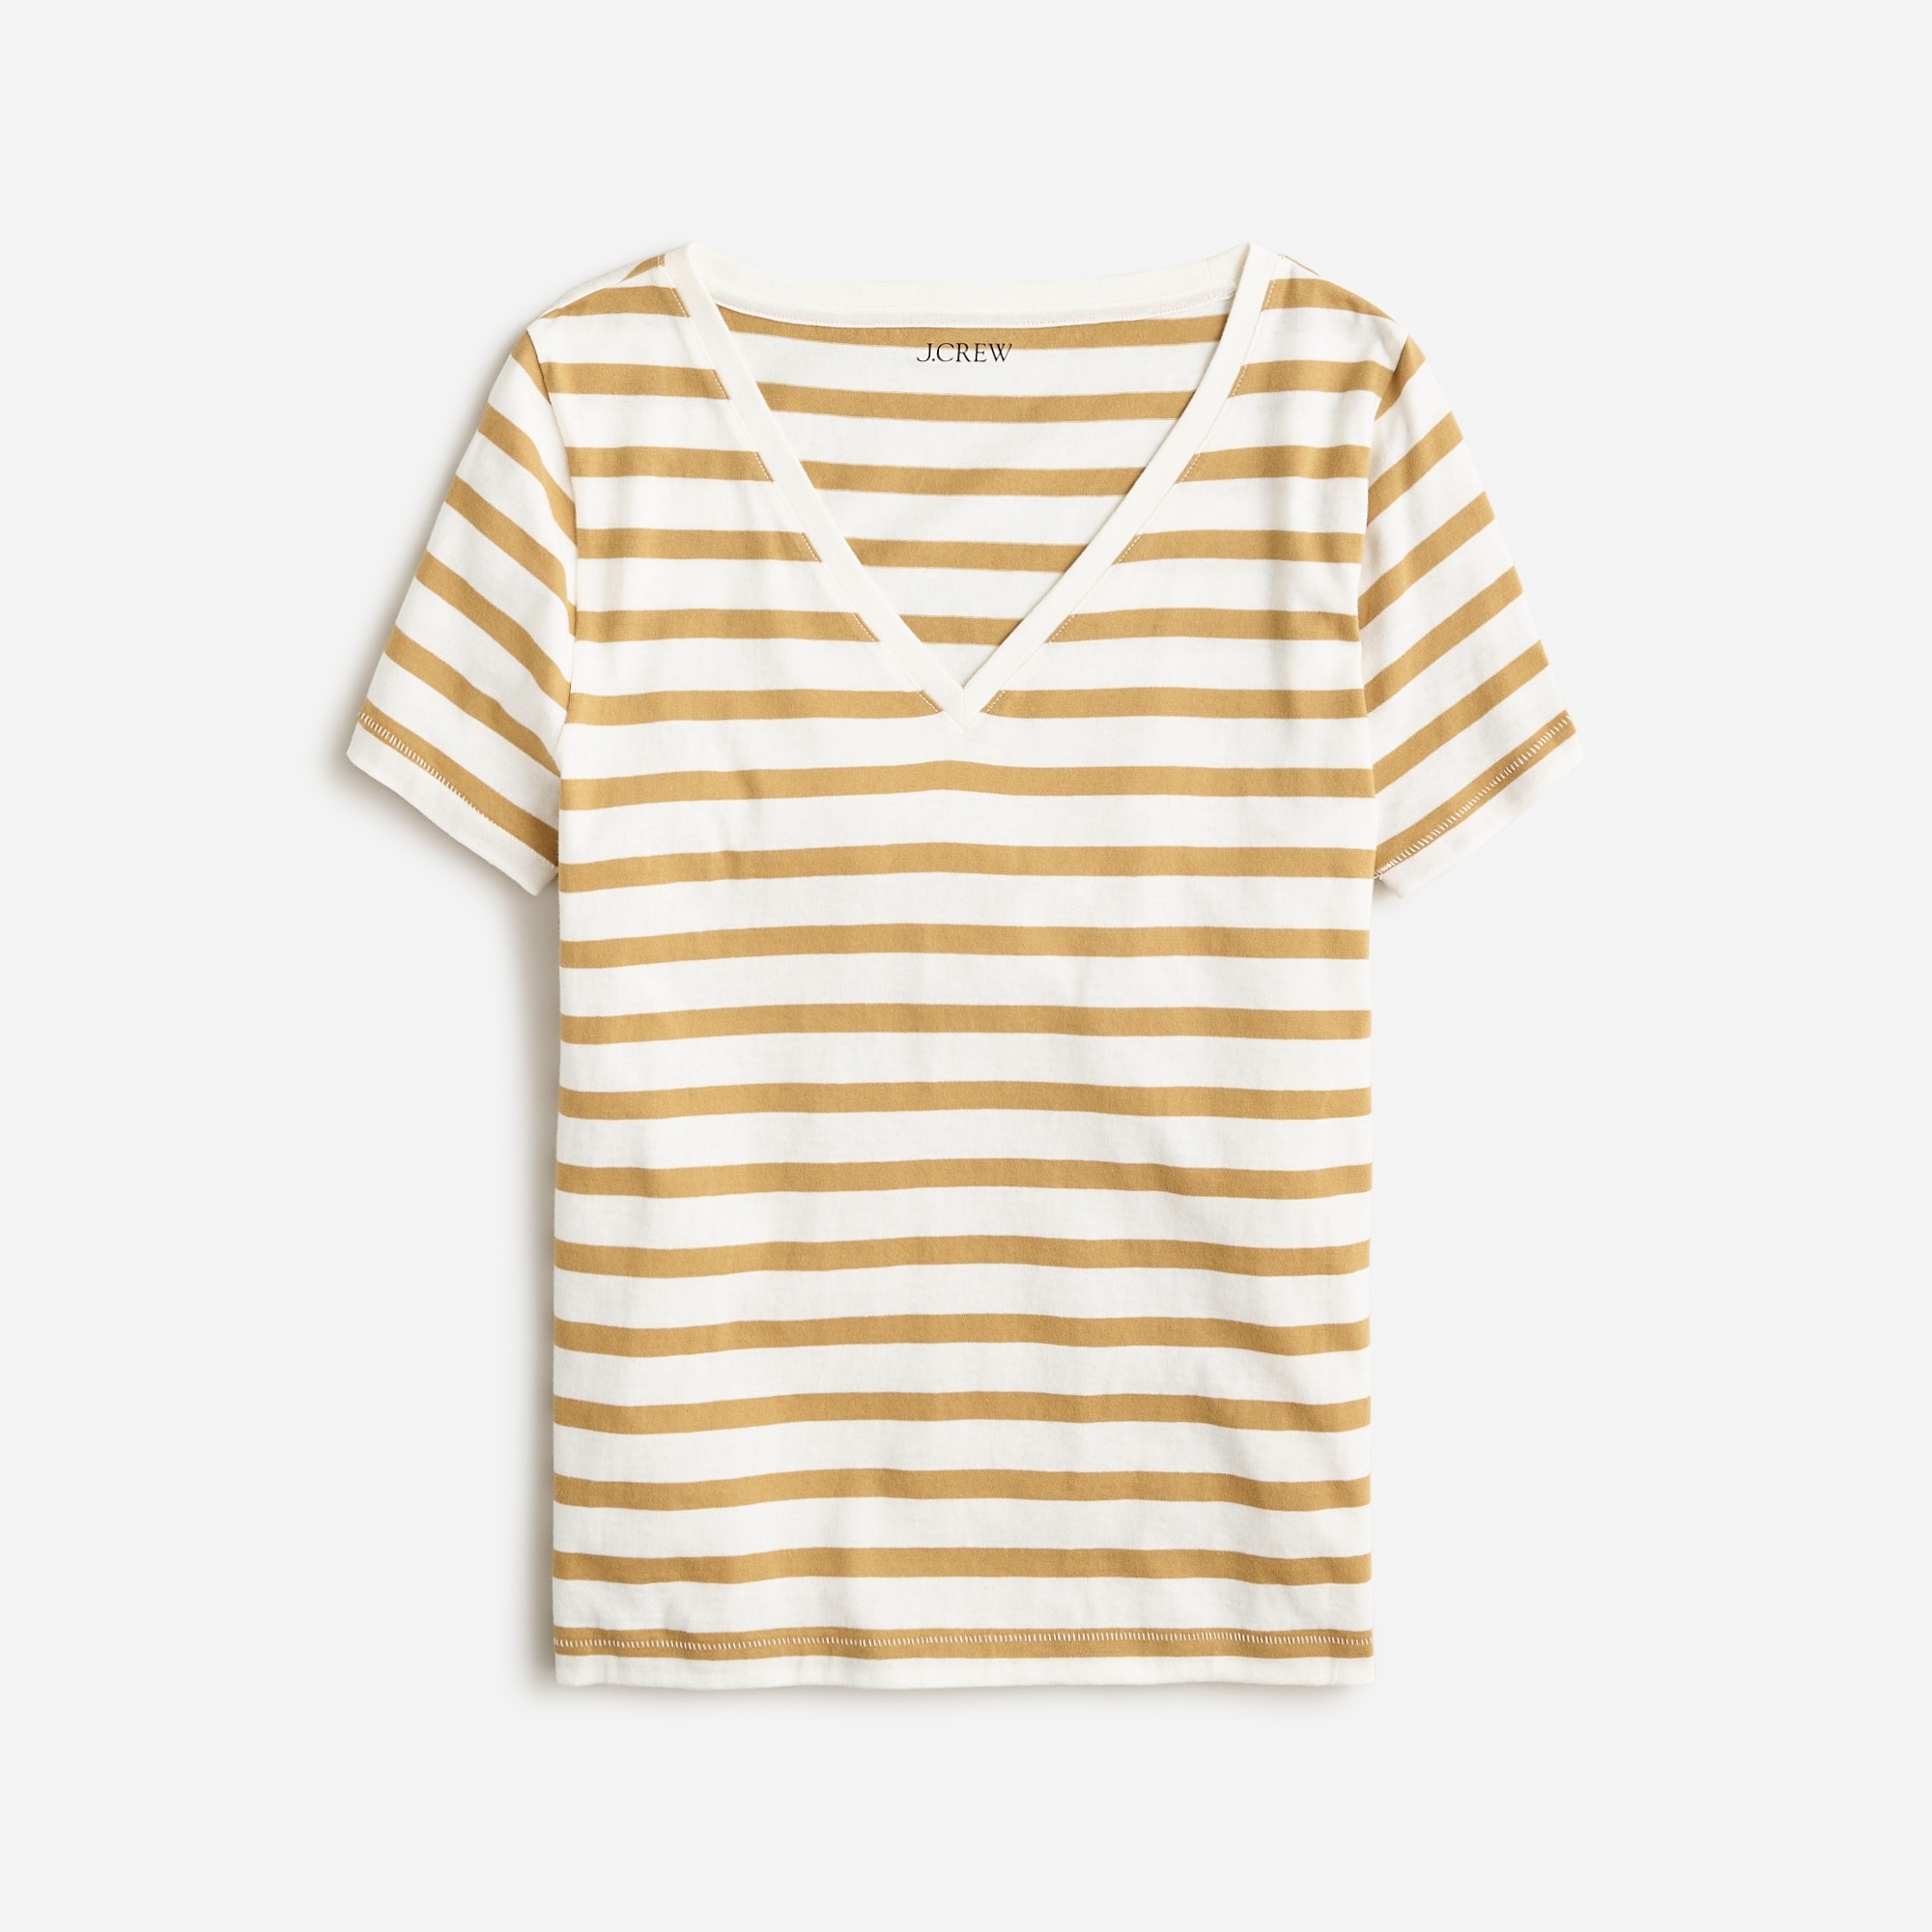  Vintage jersey classic-fit V-neck T-shirt in stripe